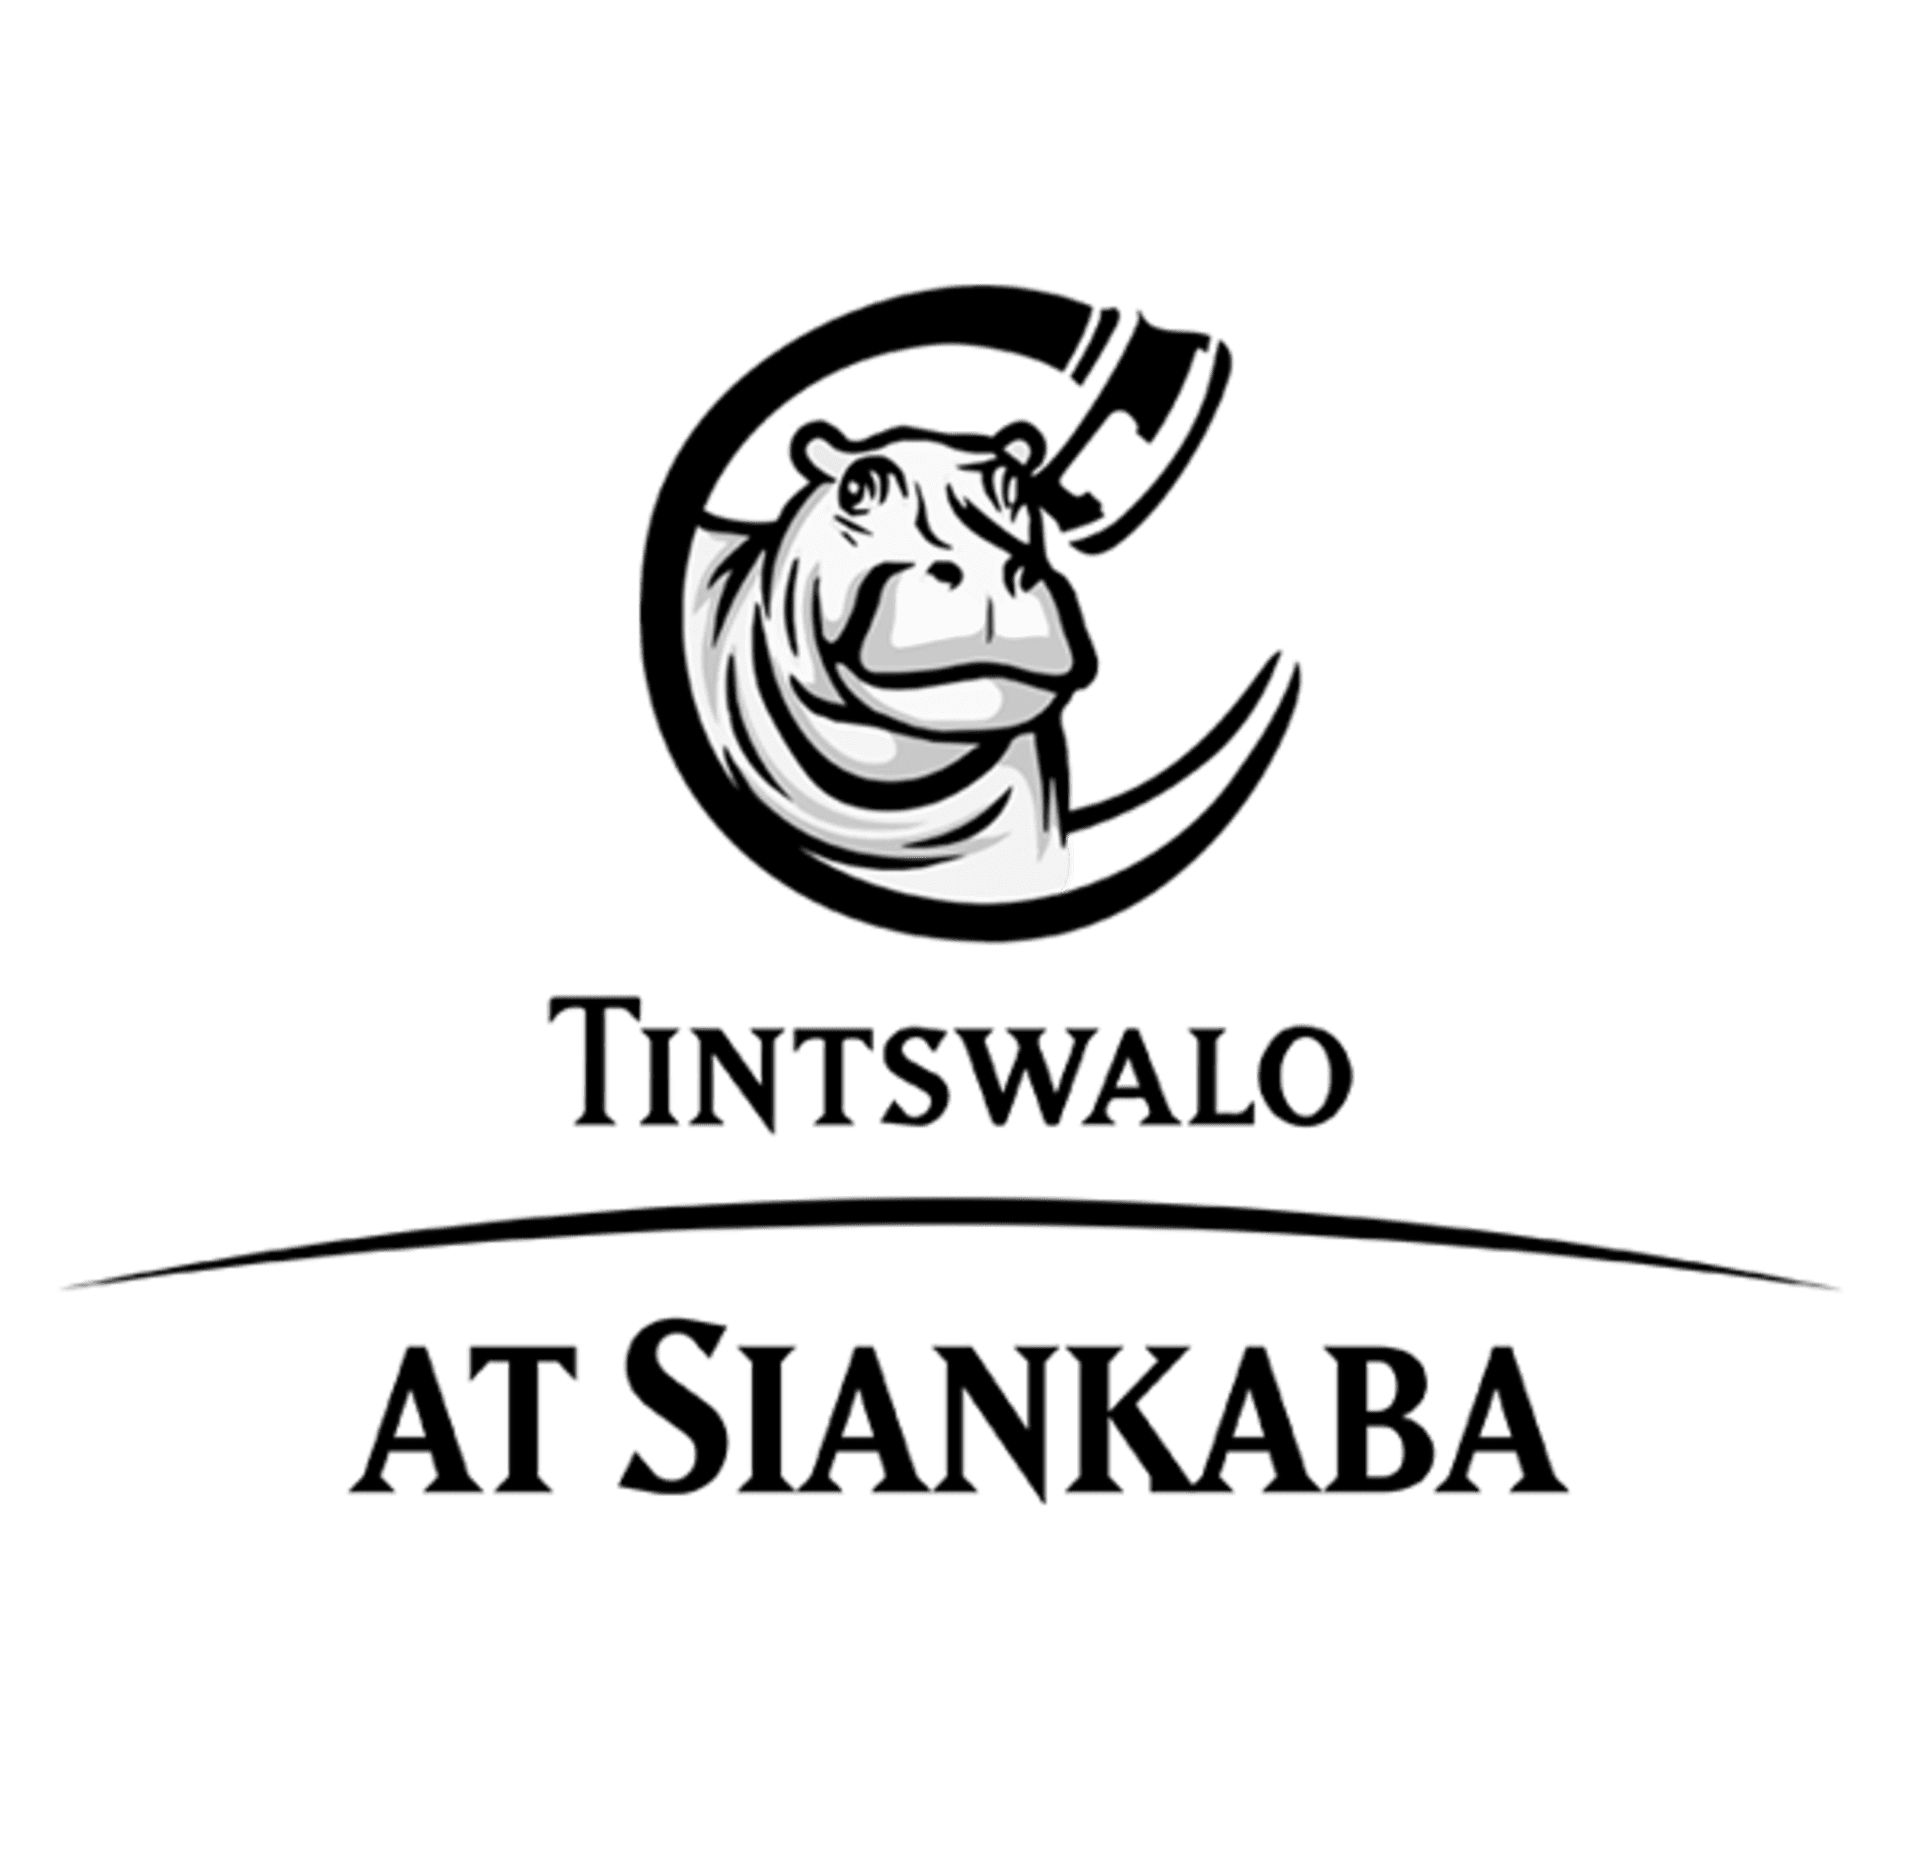 Tintswalo-At-Siankaba-1-1-1.png